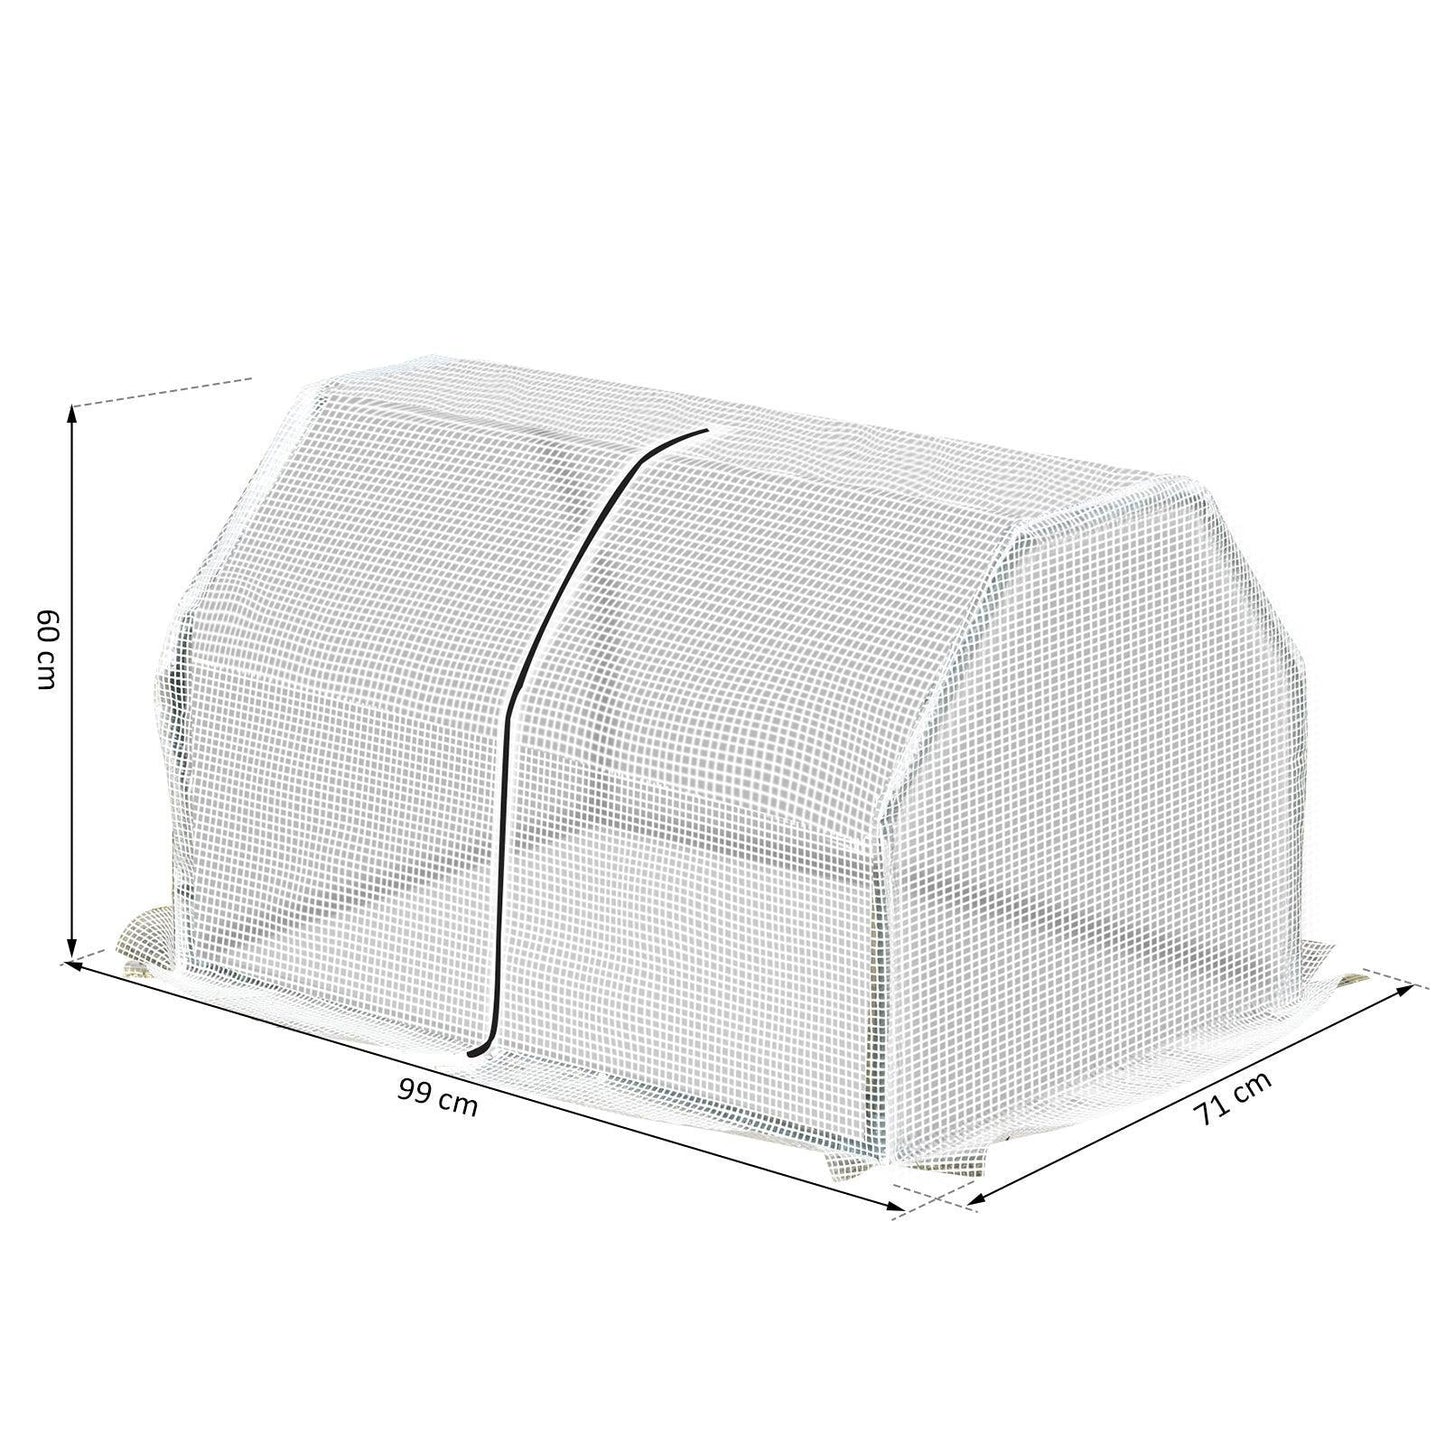 Outsunny Small Greenhouse - Portable & Durable - ALL4U RETAILER LTD